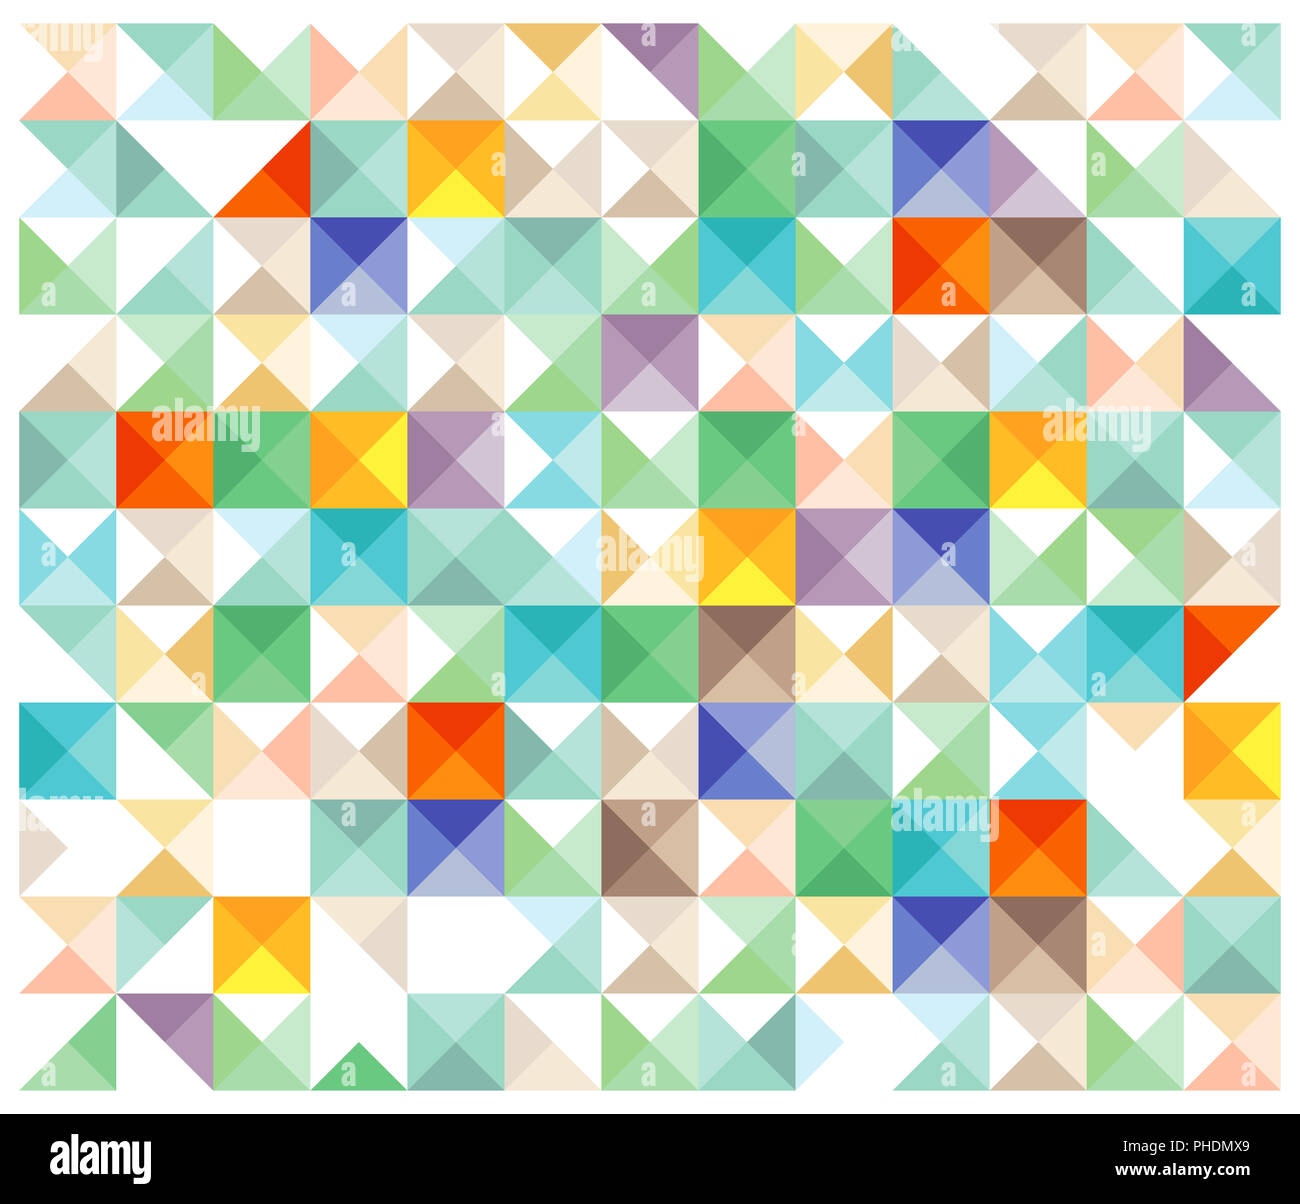 colorful pattern elements, illustration Stock Photo